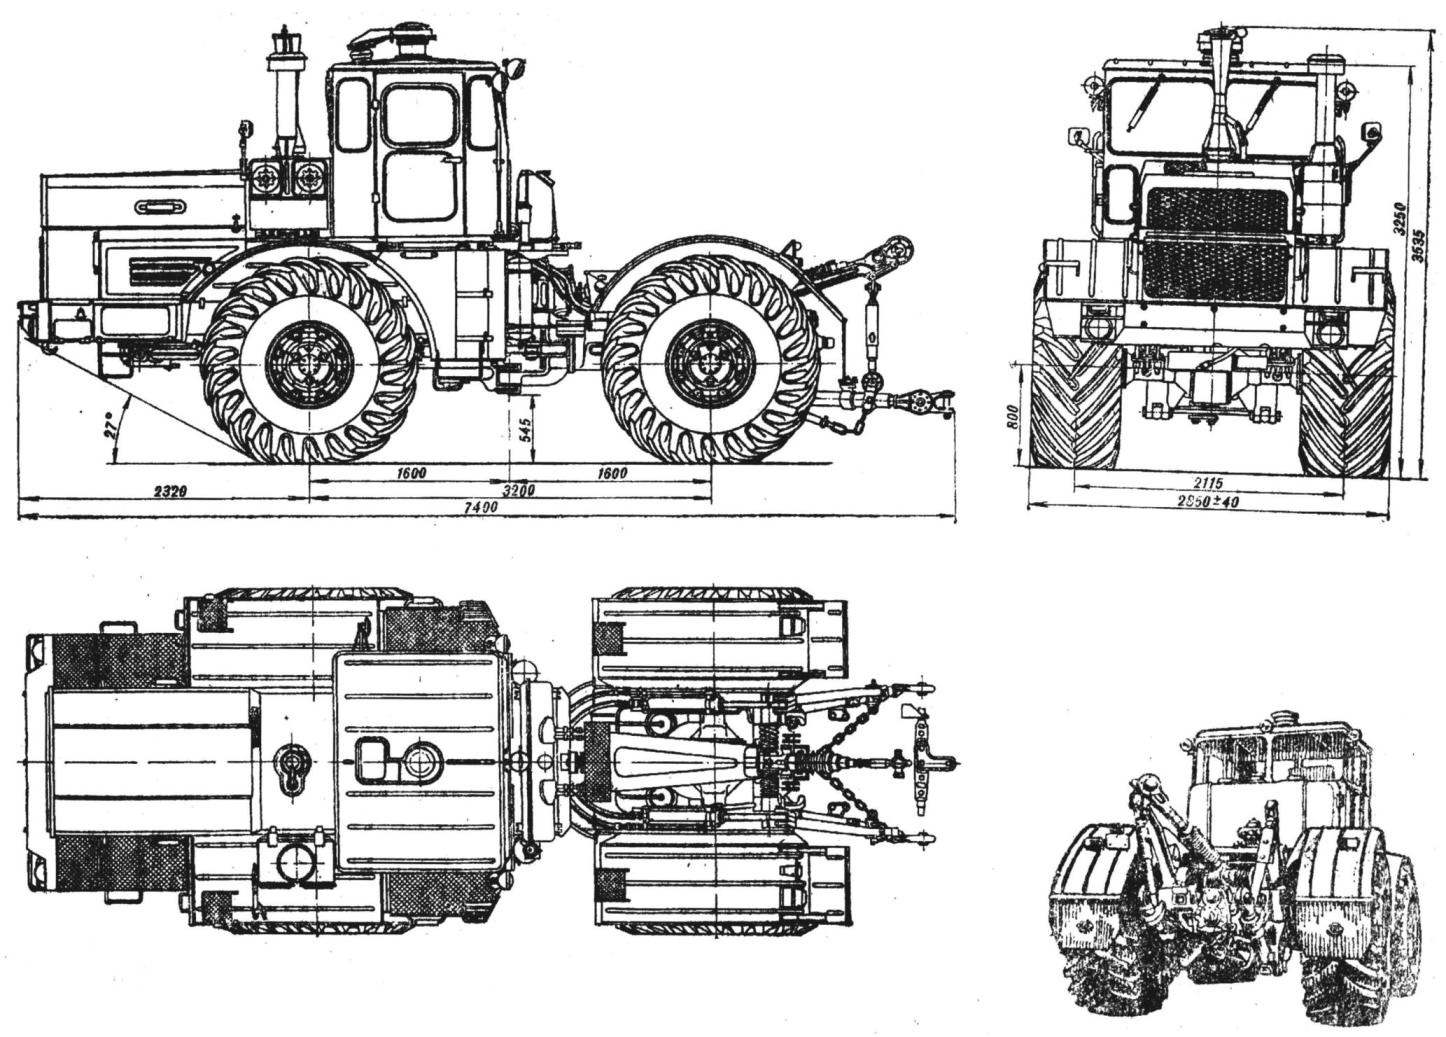 Трактор кировец к 701 — характеристики, видео, модификации